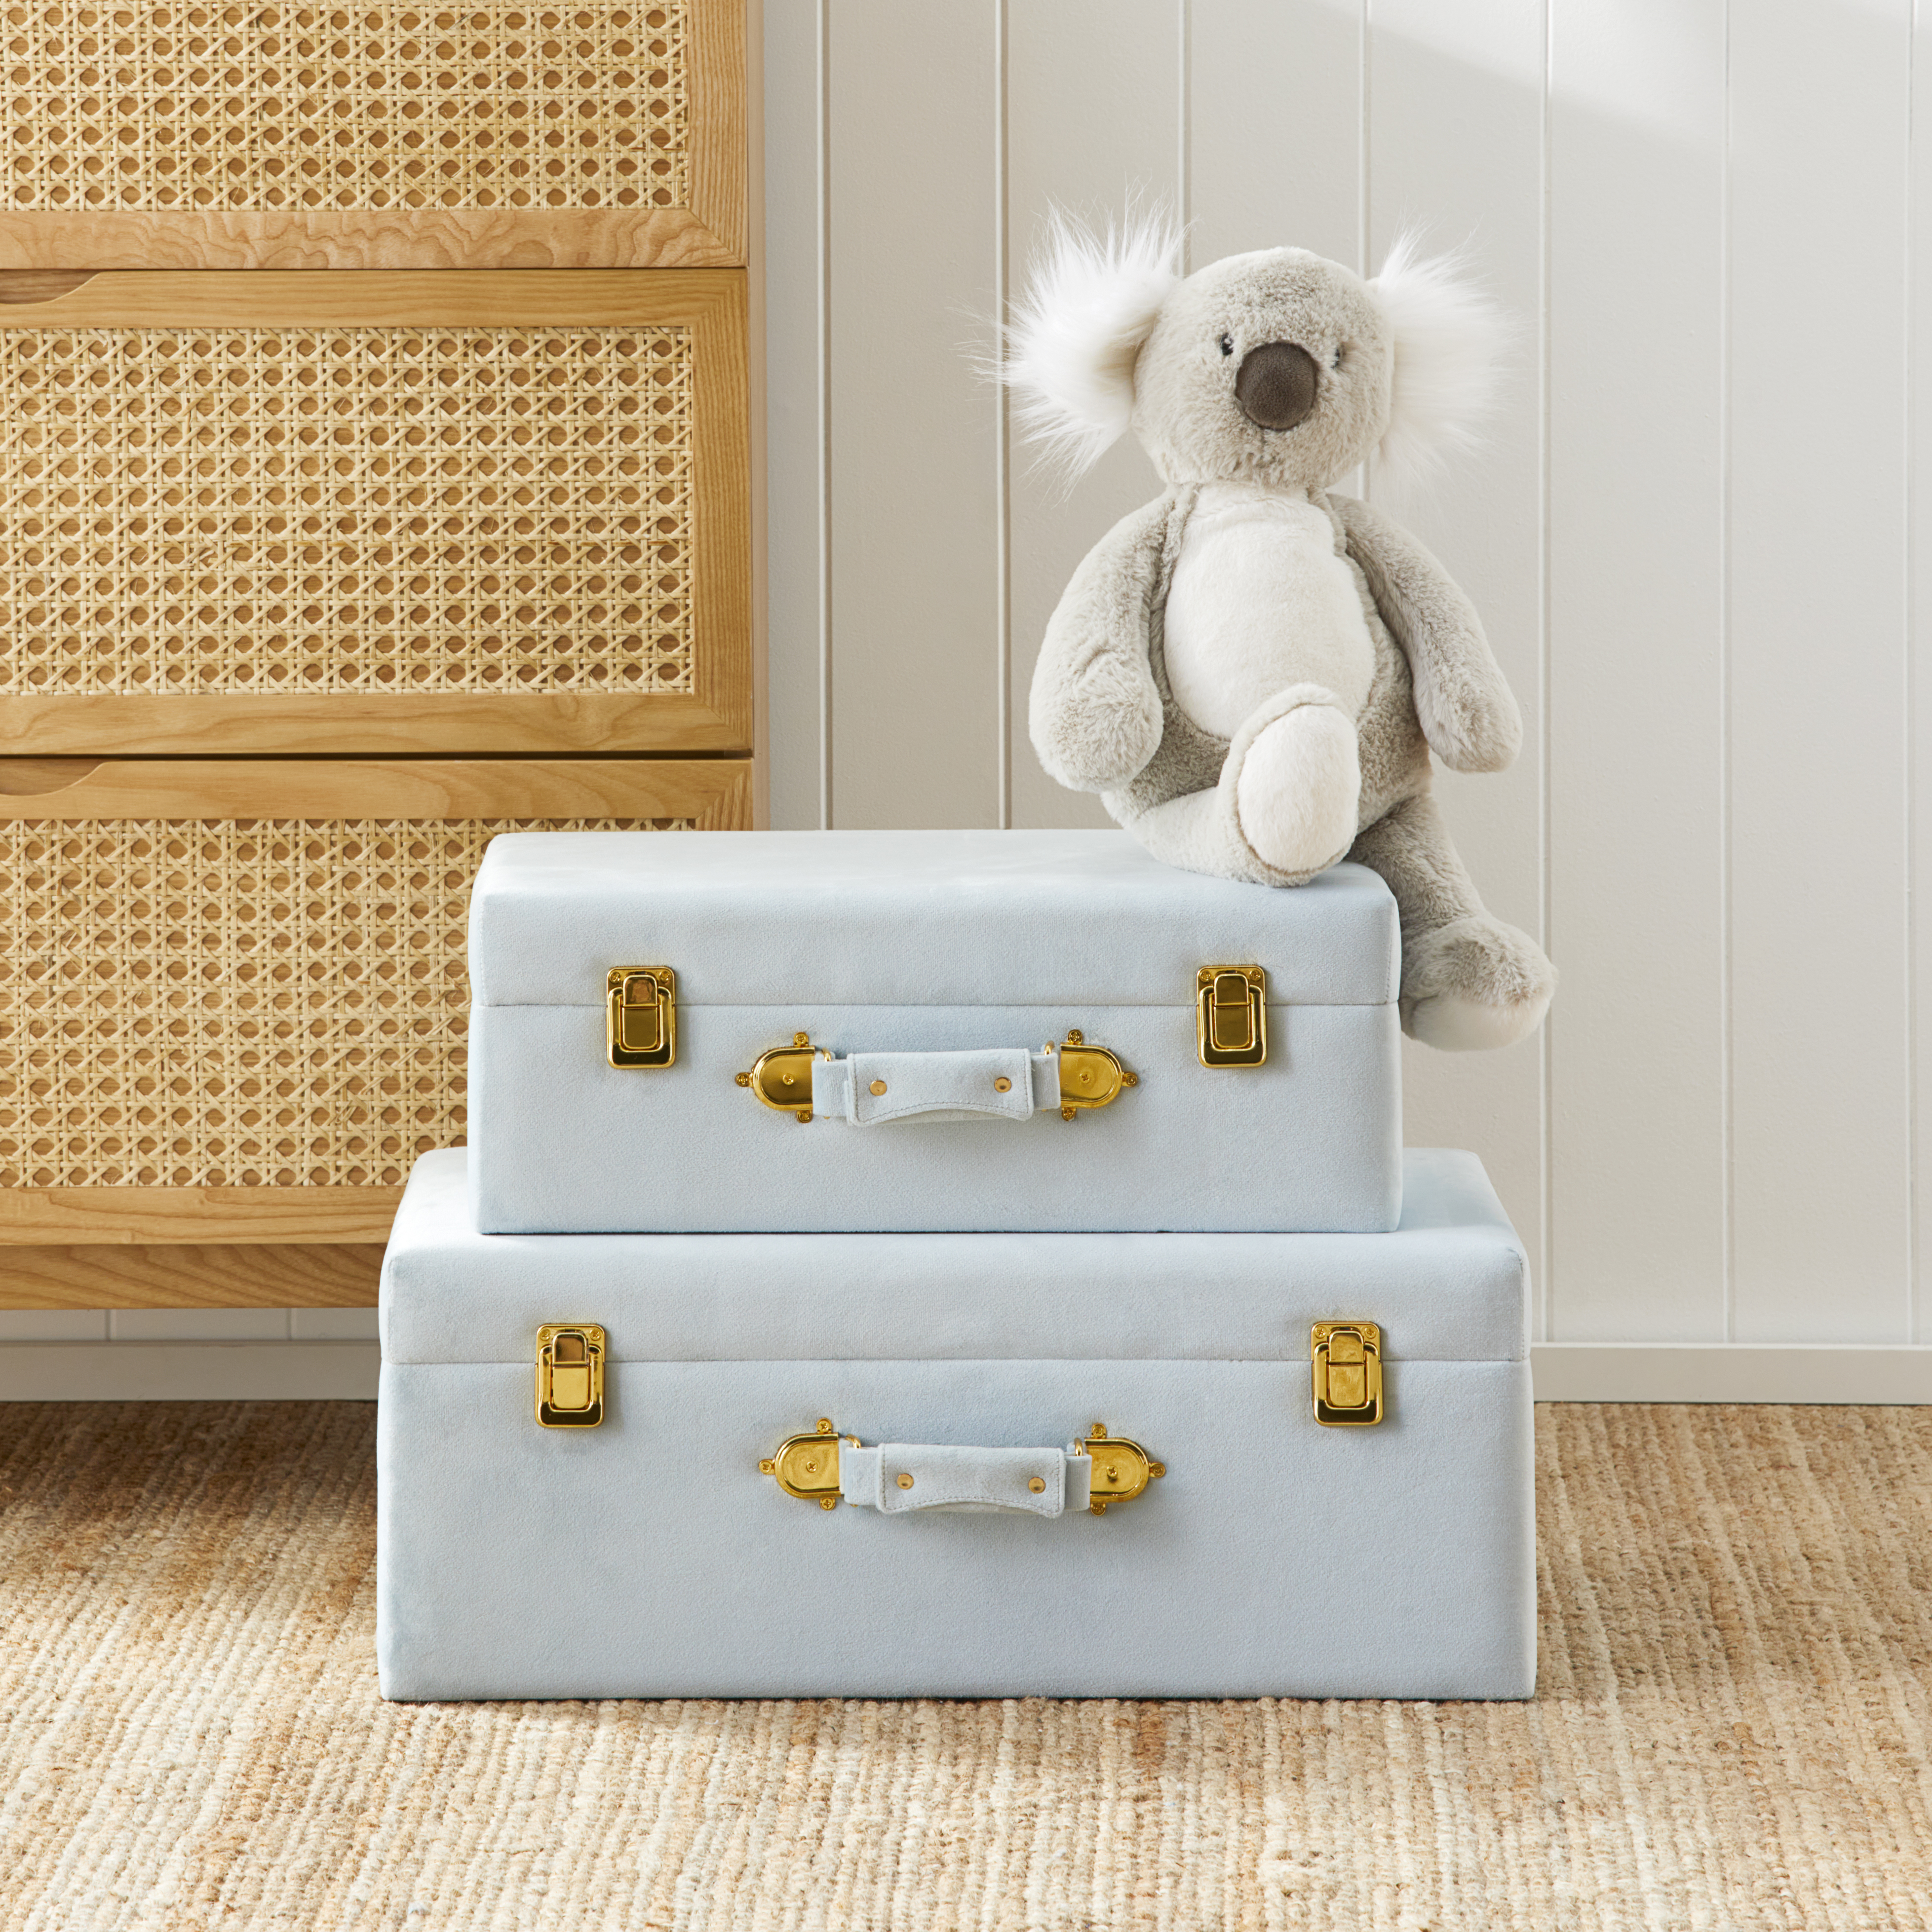 Adairs Kids - Keepsake Light Blue Suitcase Set of 2 | Home u0026 Gifts | Adairs